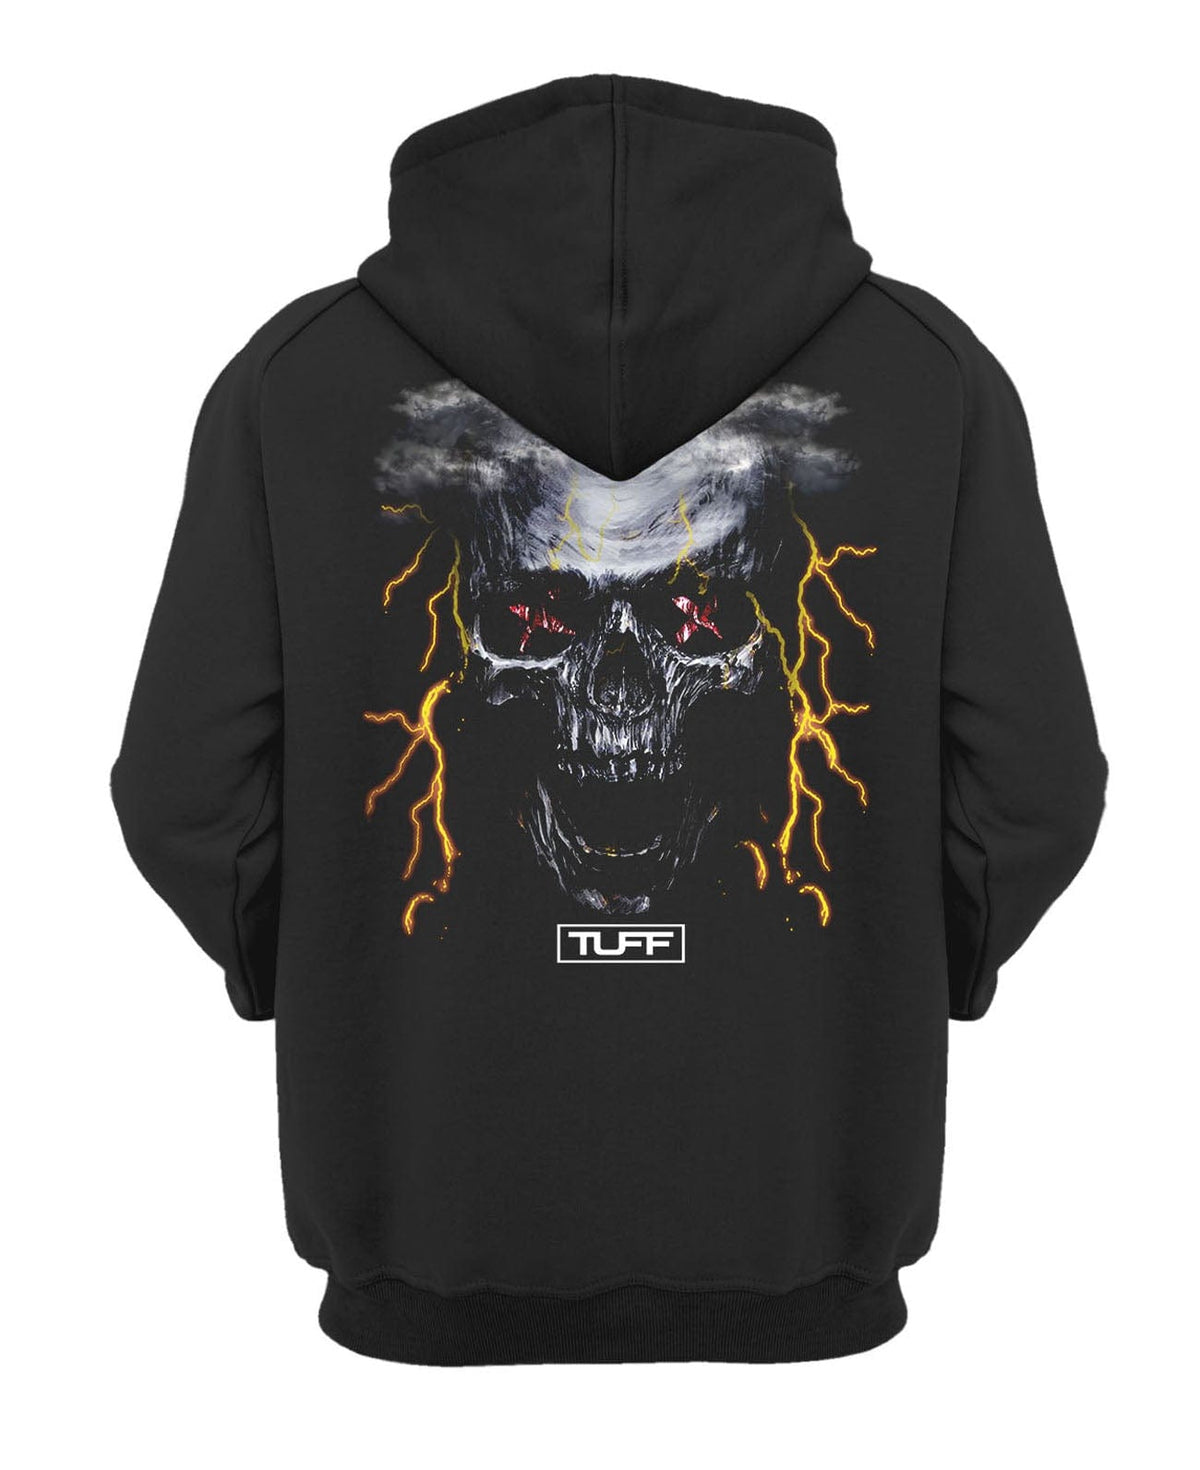 TUFF Lightning Skull Hooded Sweatshirt XS / Black TuffWraps.com